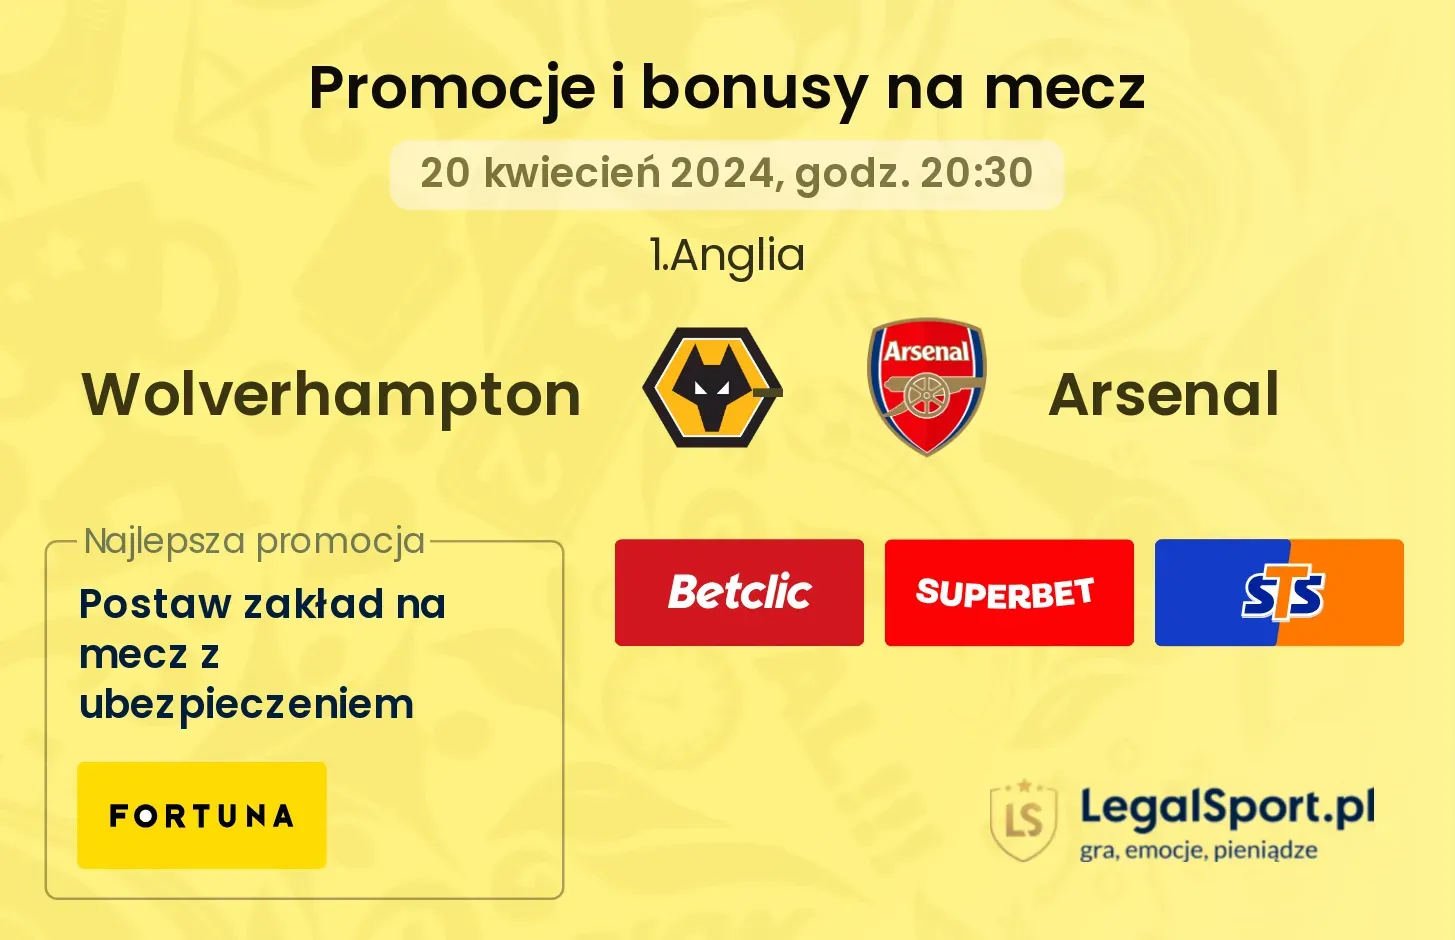 Wolverhampton - Arsenal promocje bonusy na mecz